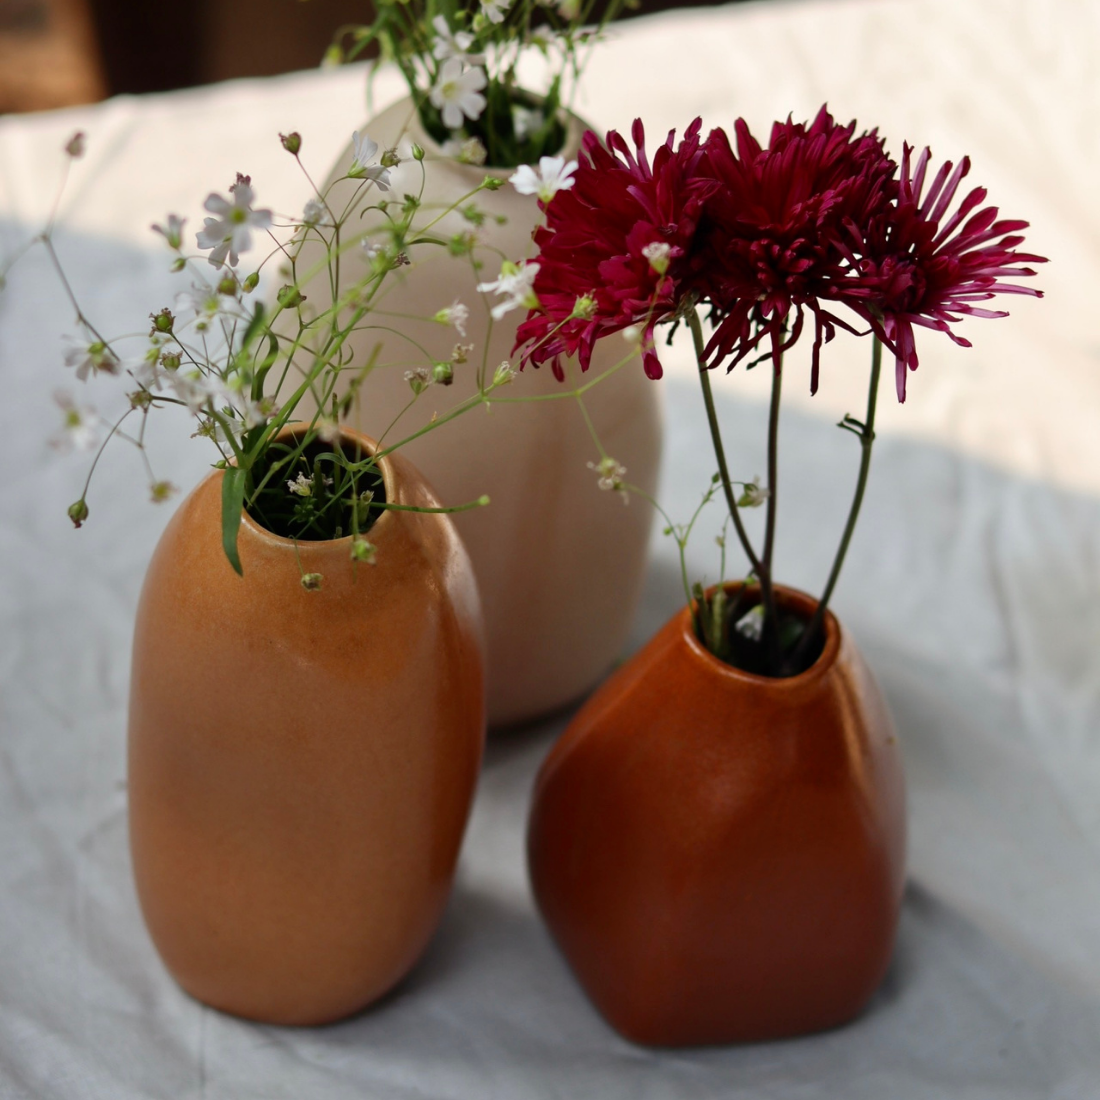 Ceramic little rust flower vase with flowers